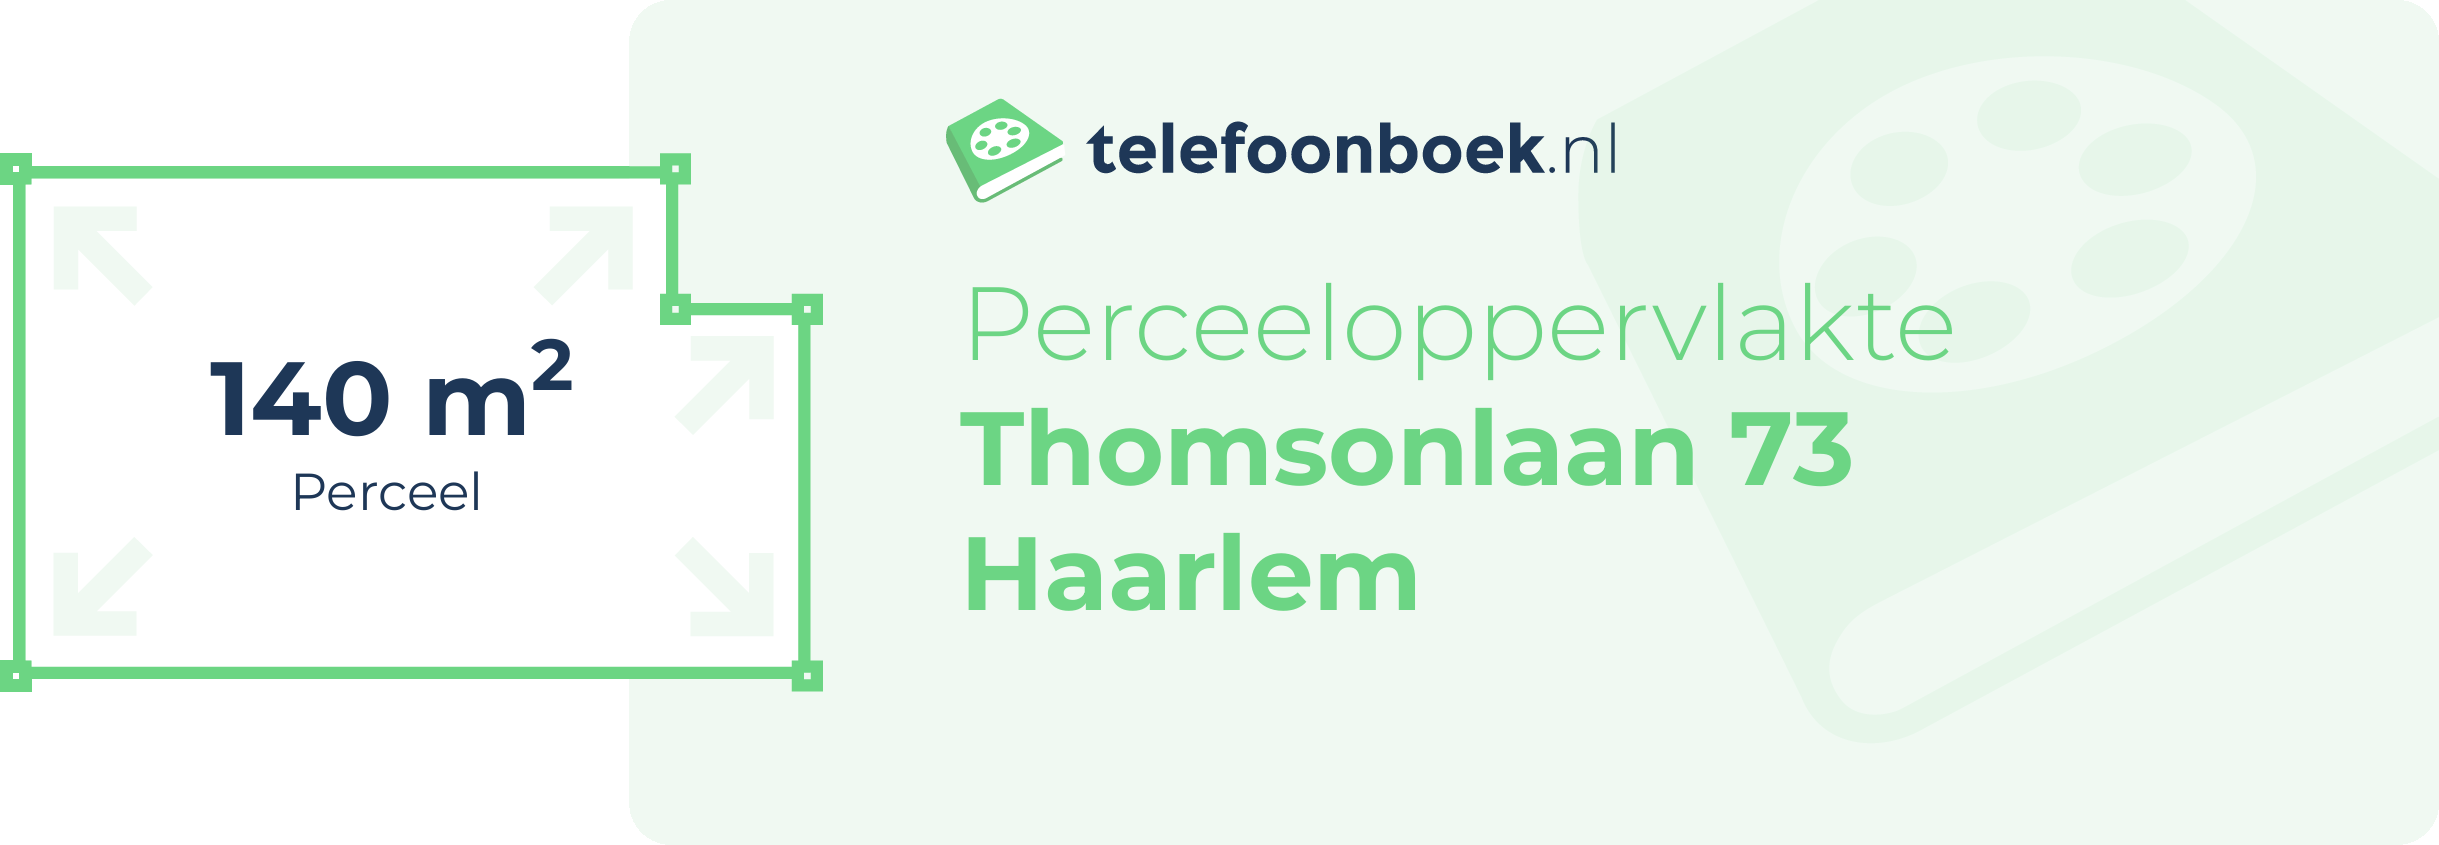 Perceeloppervlakte Thomsonlaan 73 Haarlem